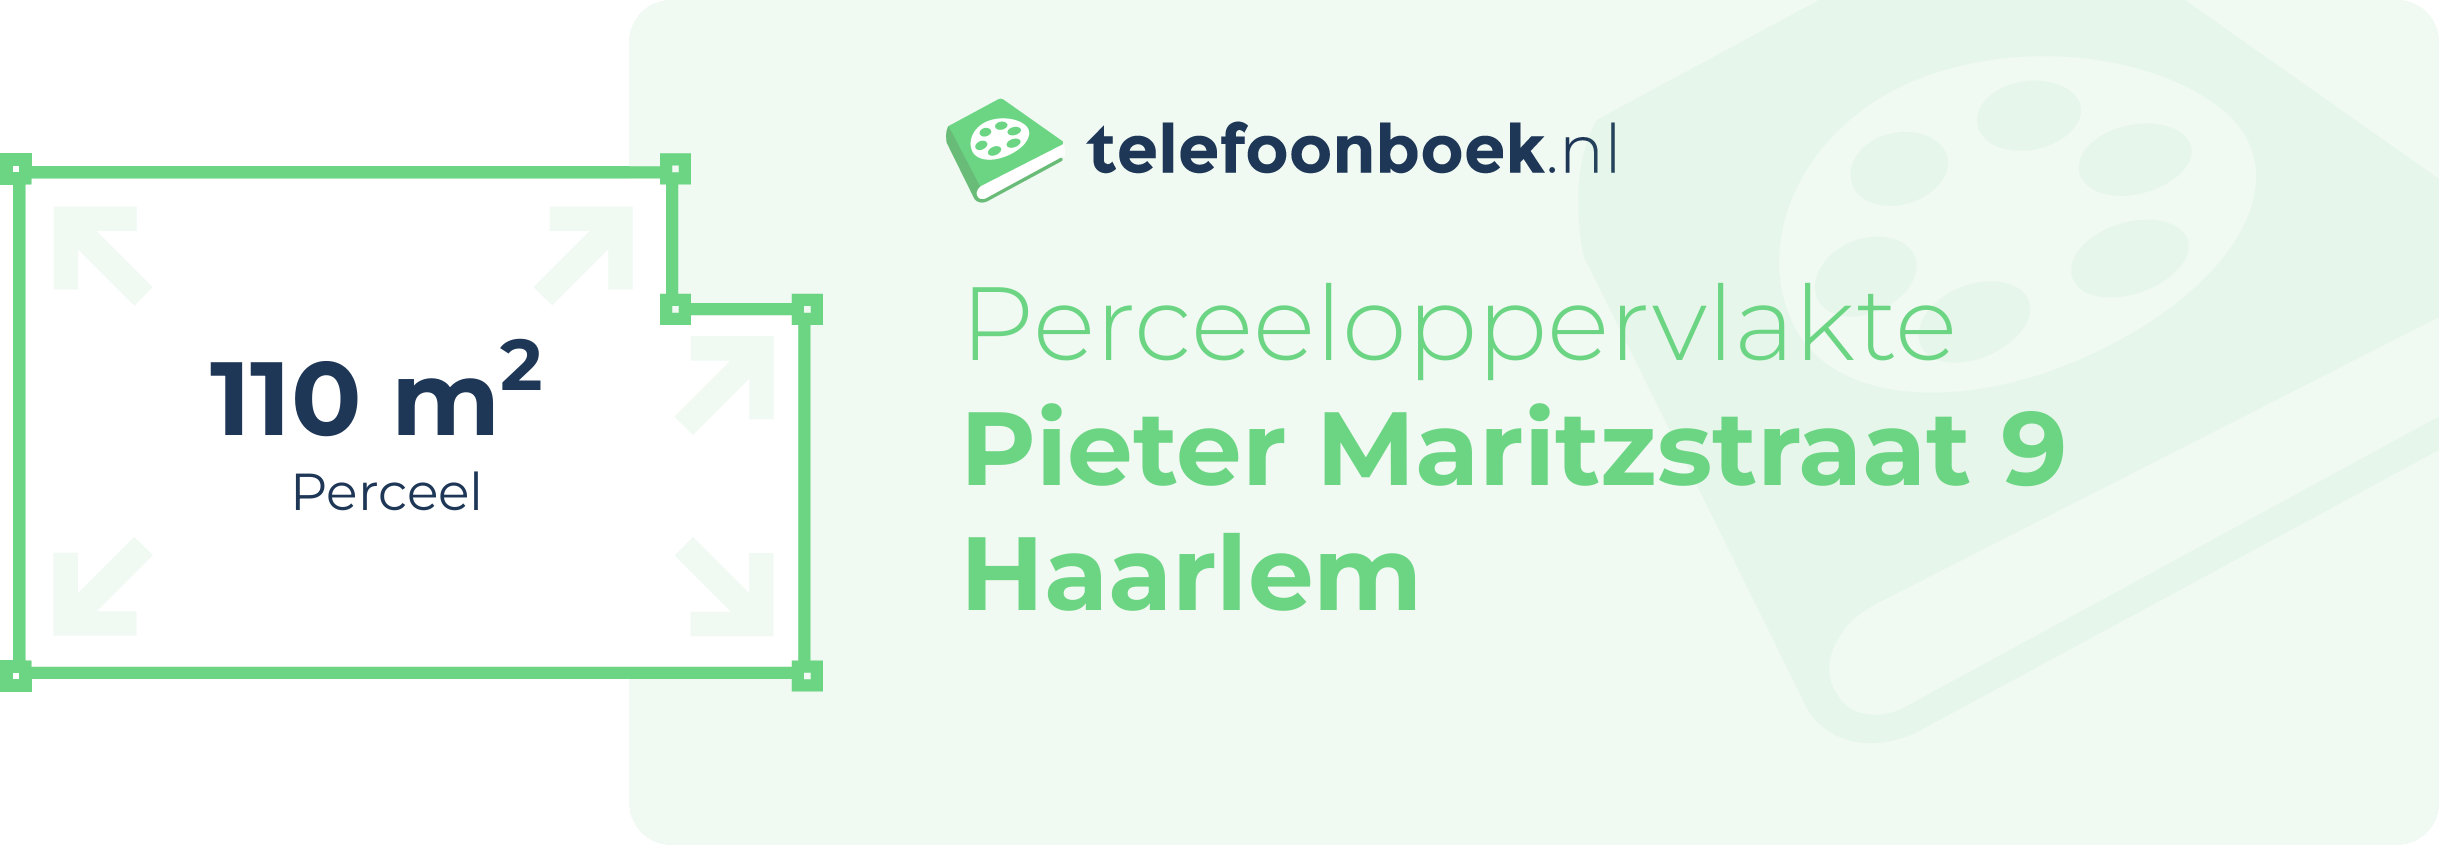 Perceeloppervlakte Pieter Maritzstraat 9 Haarlem